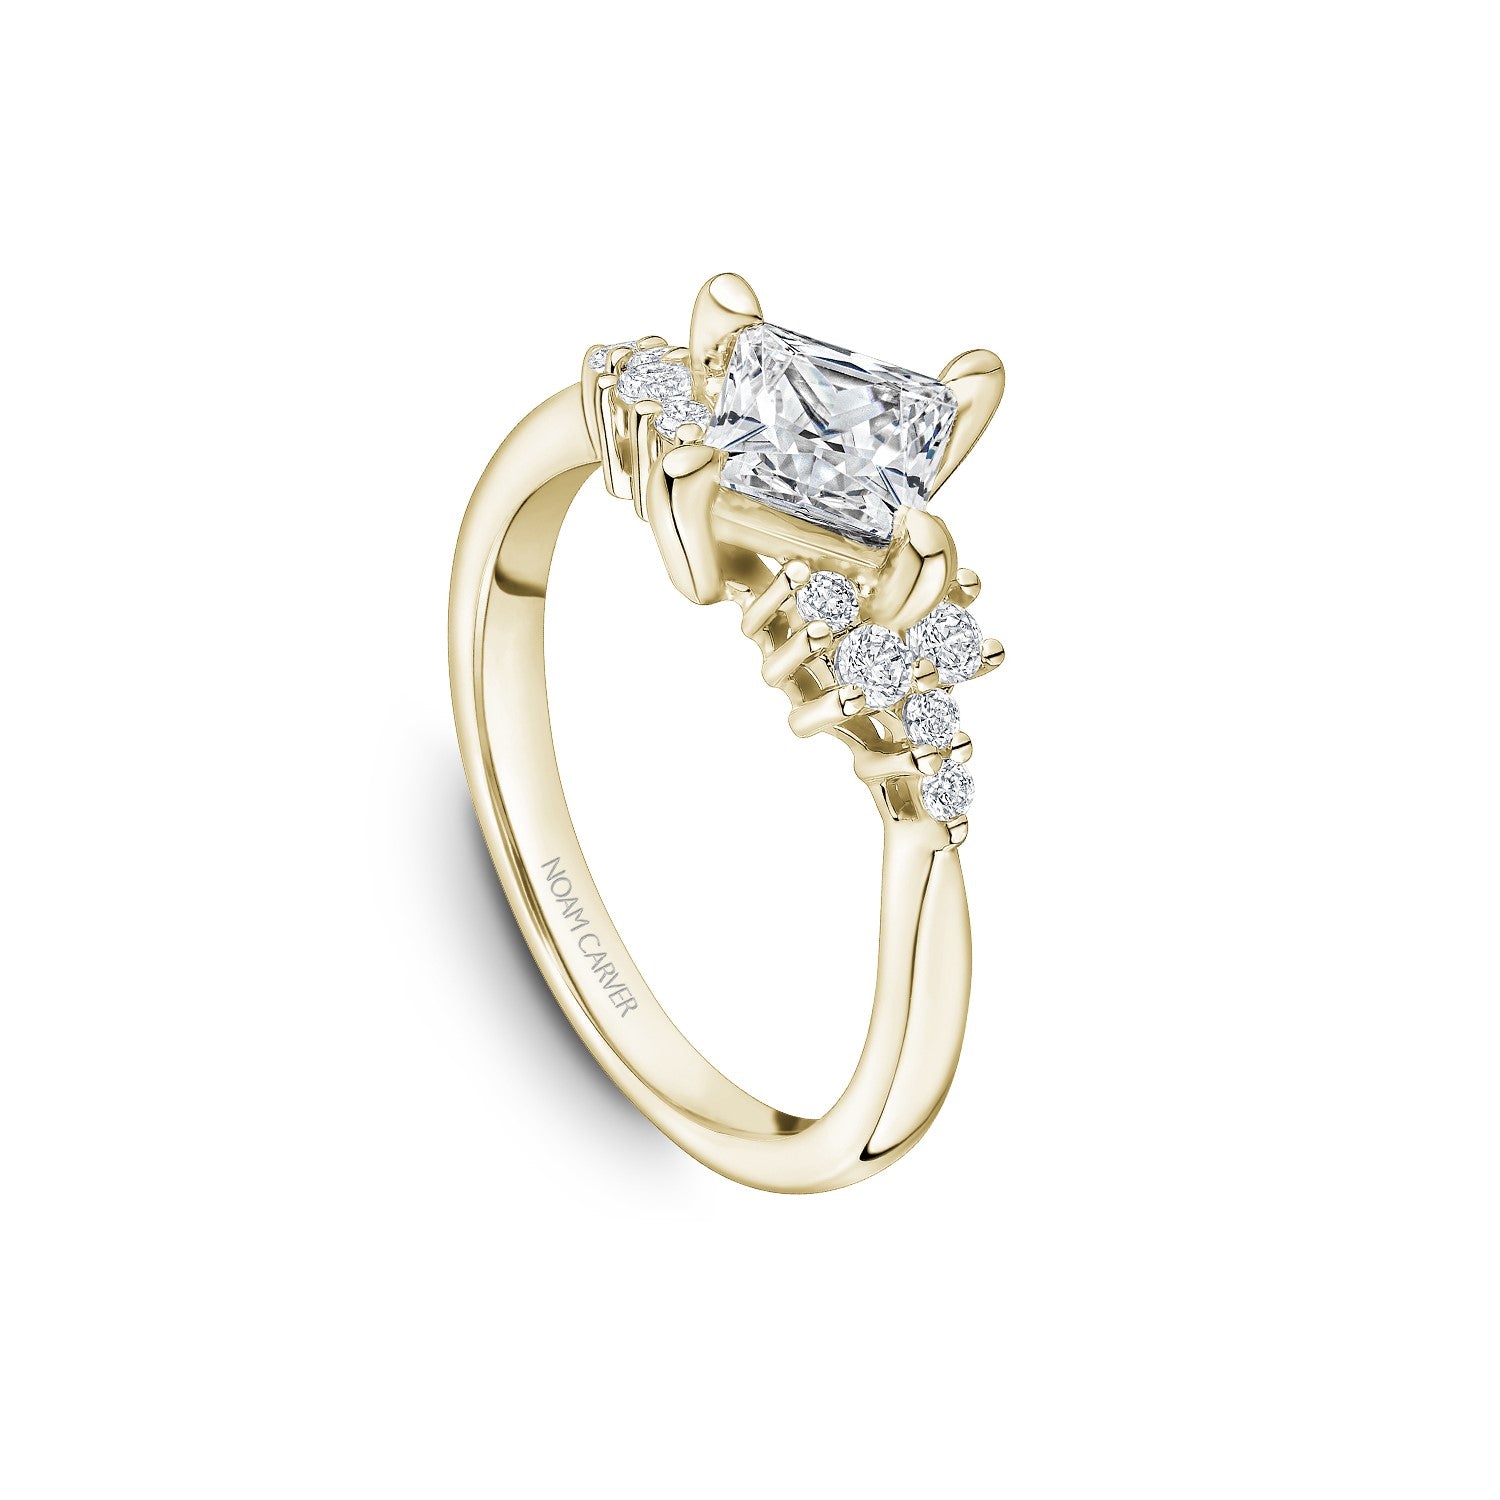 Noam Carver Princess Cut Diamond Engagement Ring